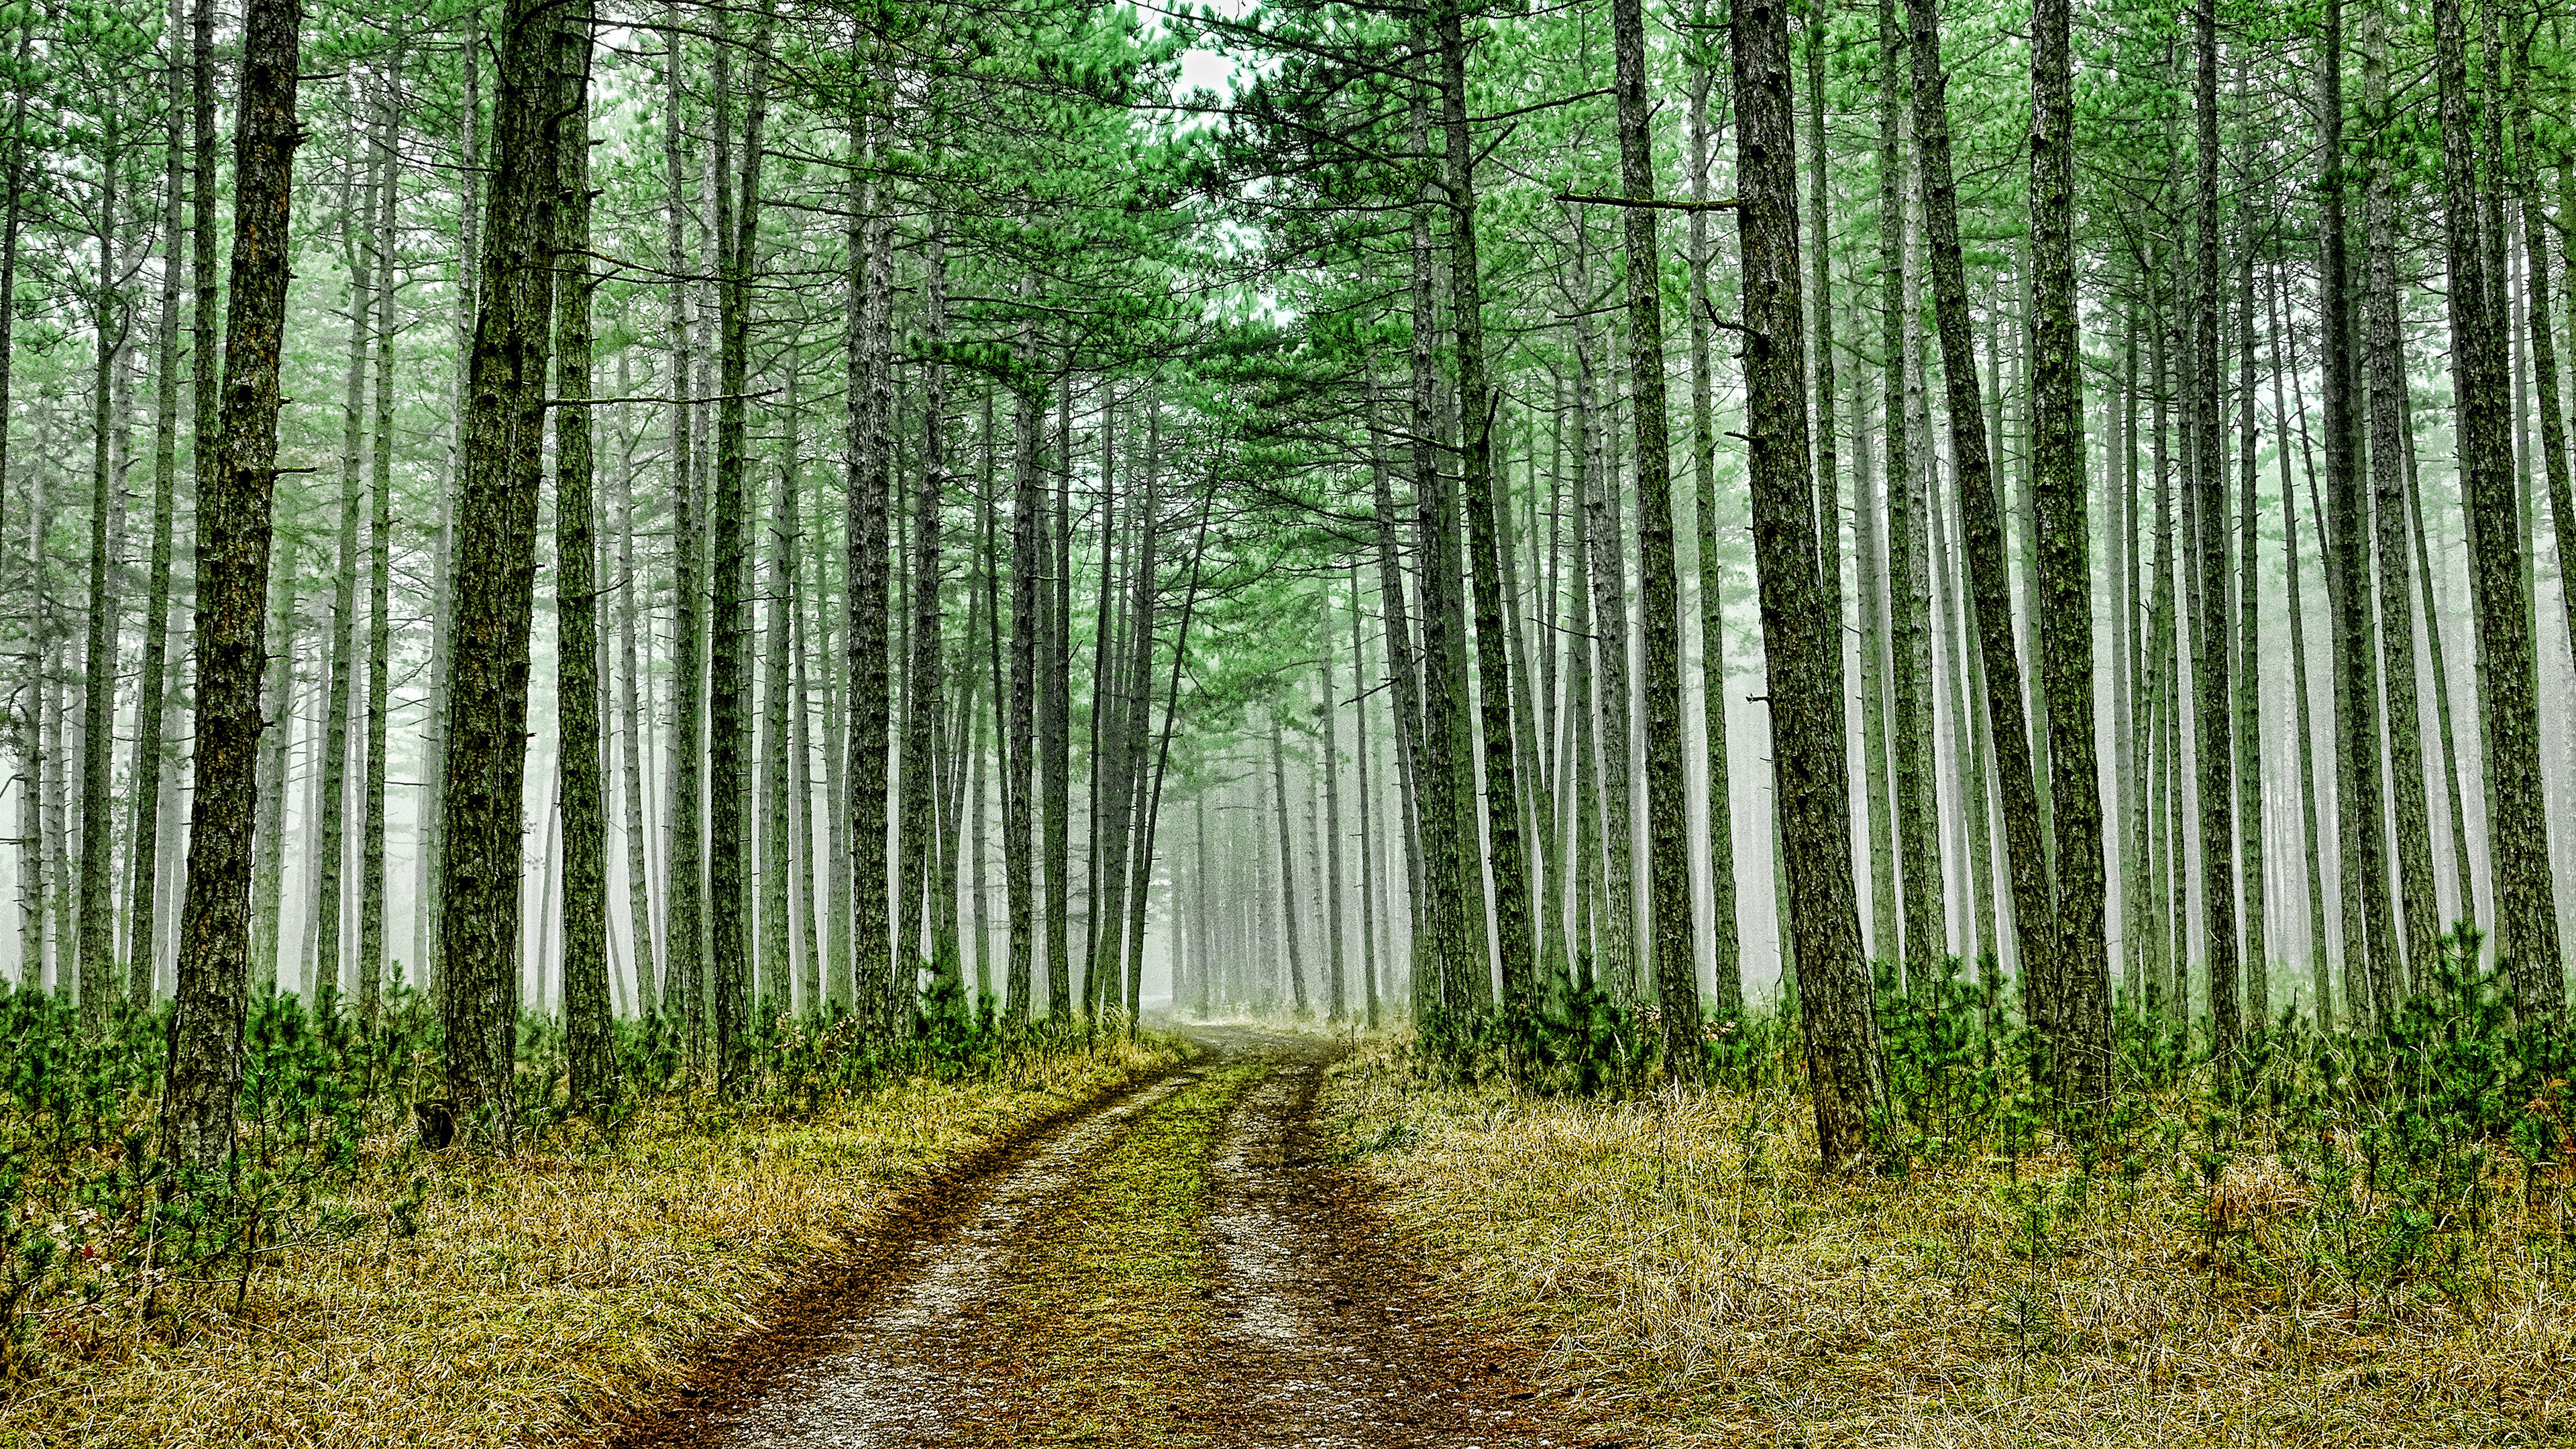 Green forest road, Nature's path, Serpentine trail, Journey through trees, 3840x2160 4K Desktop